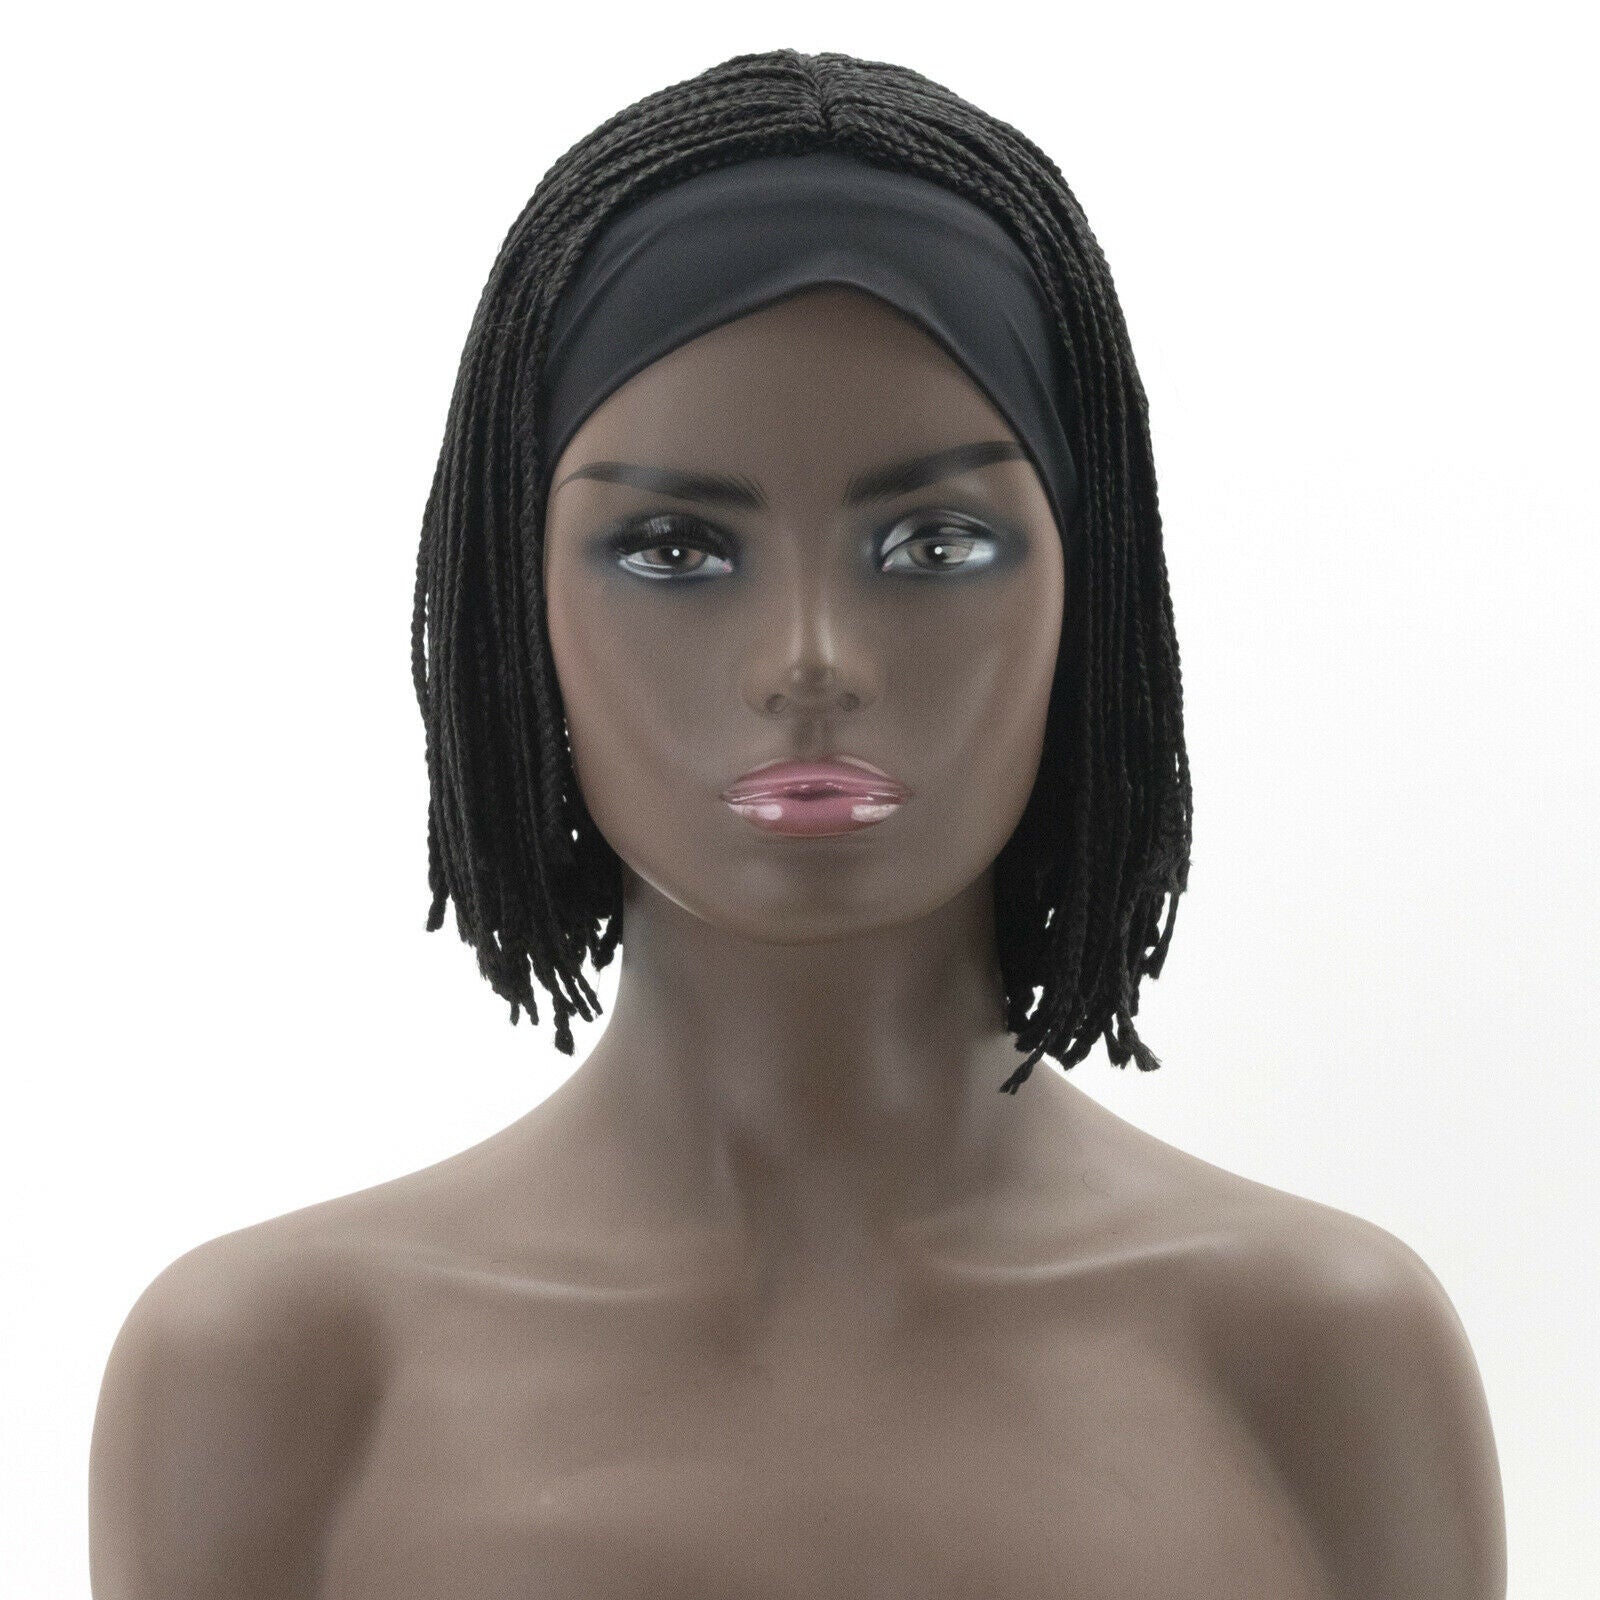 10" Thin Box Braids Headband Wrap Wigs for Black Women Synthetic Bob Hair Wigs